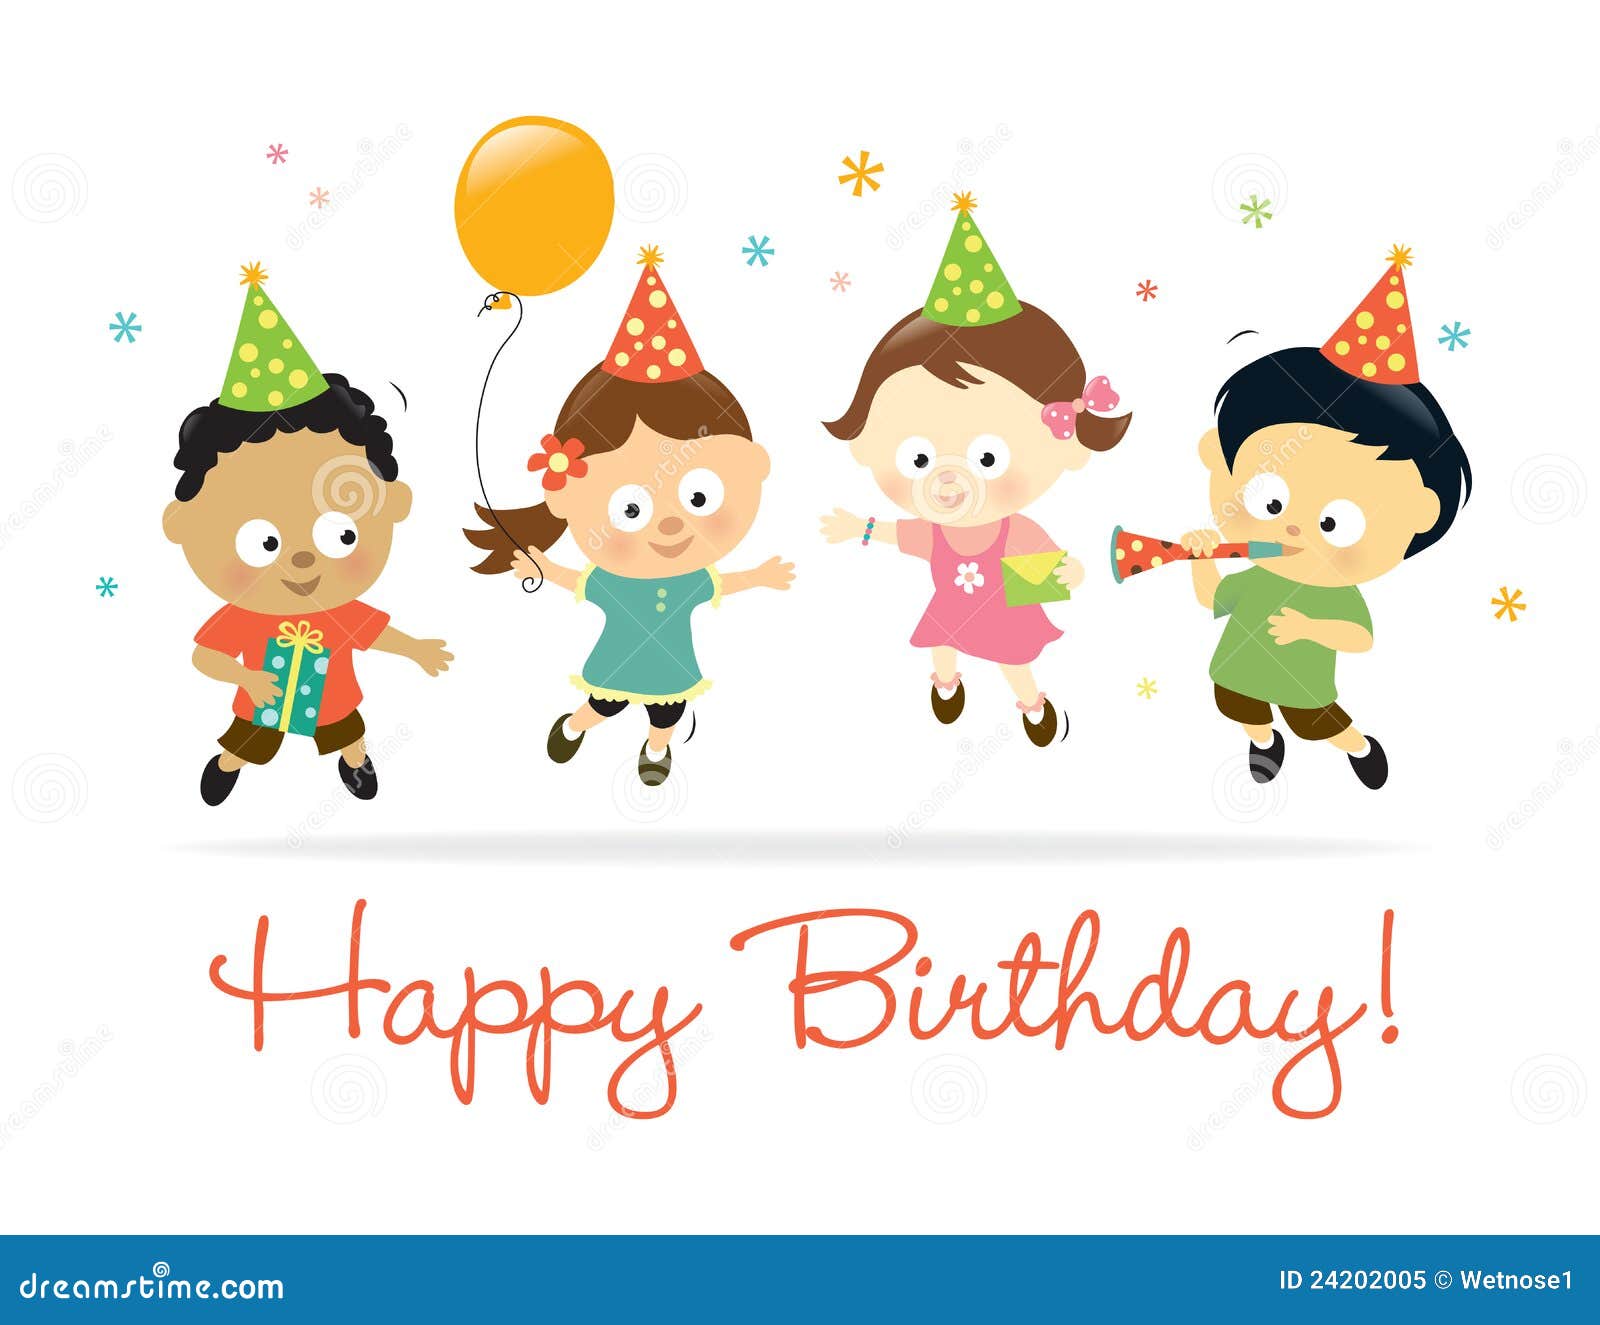 Happy Birthday kids stock vector. Illustration of american - 24202005